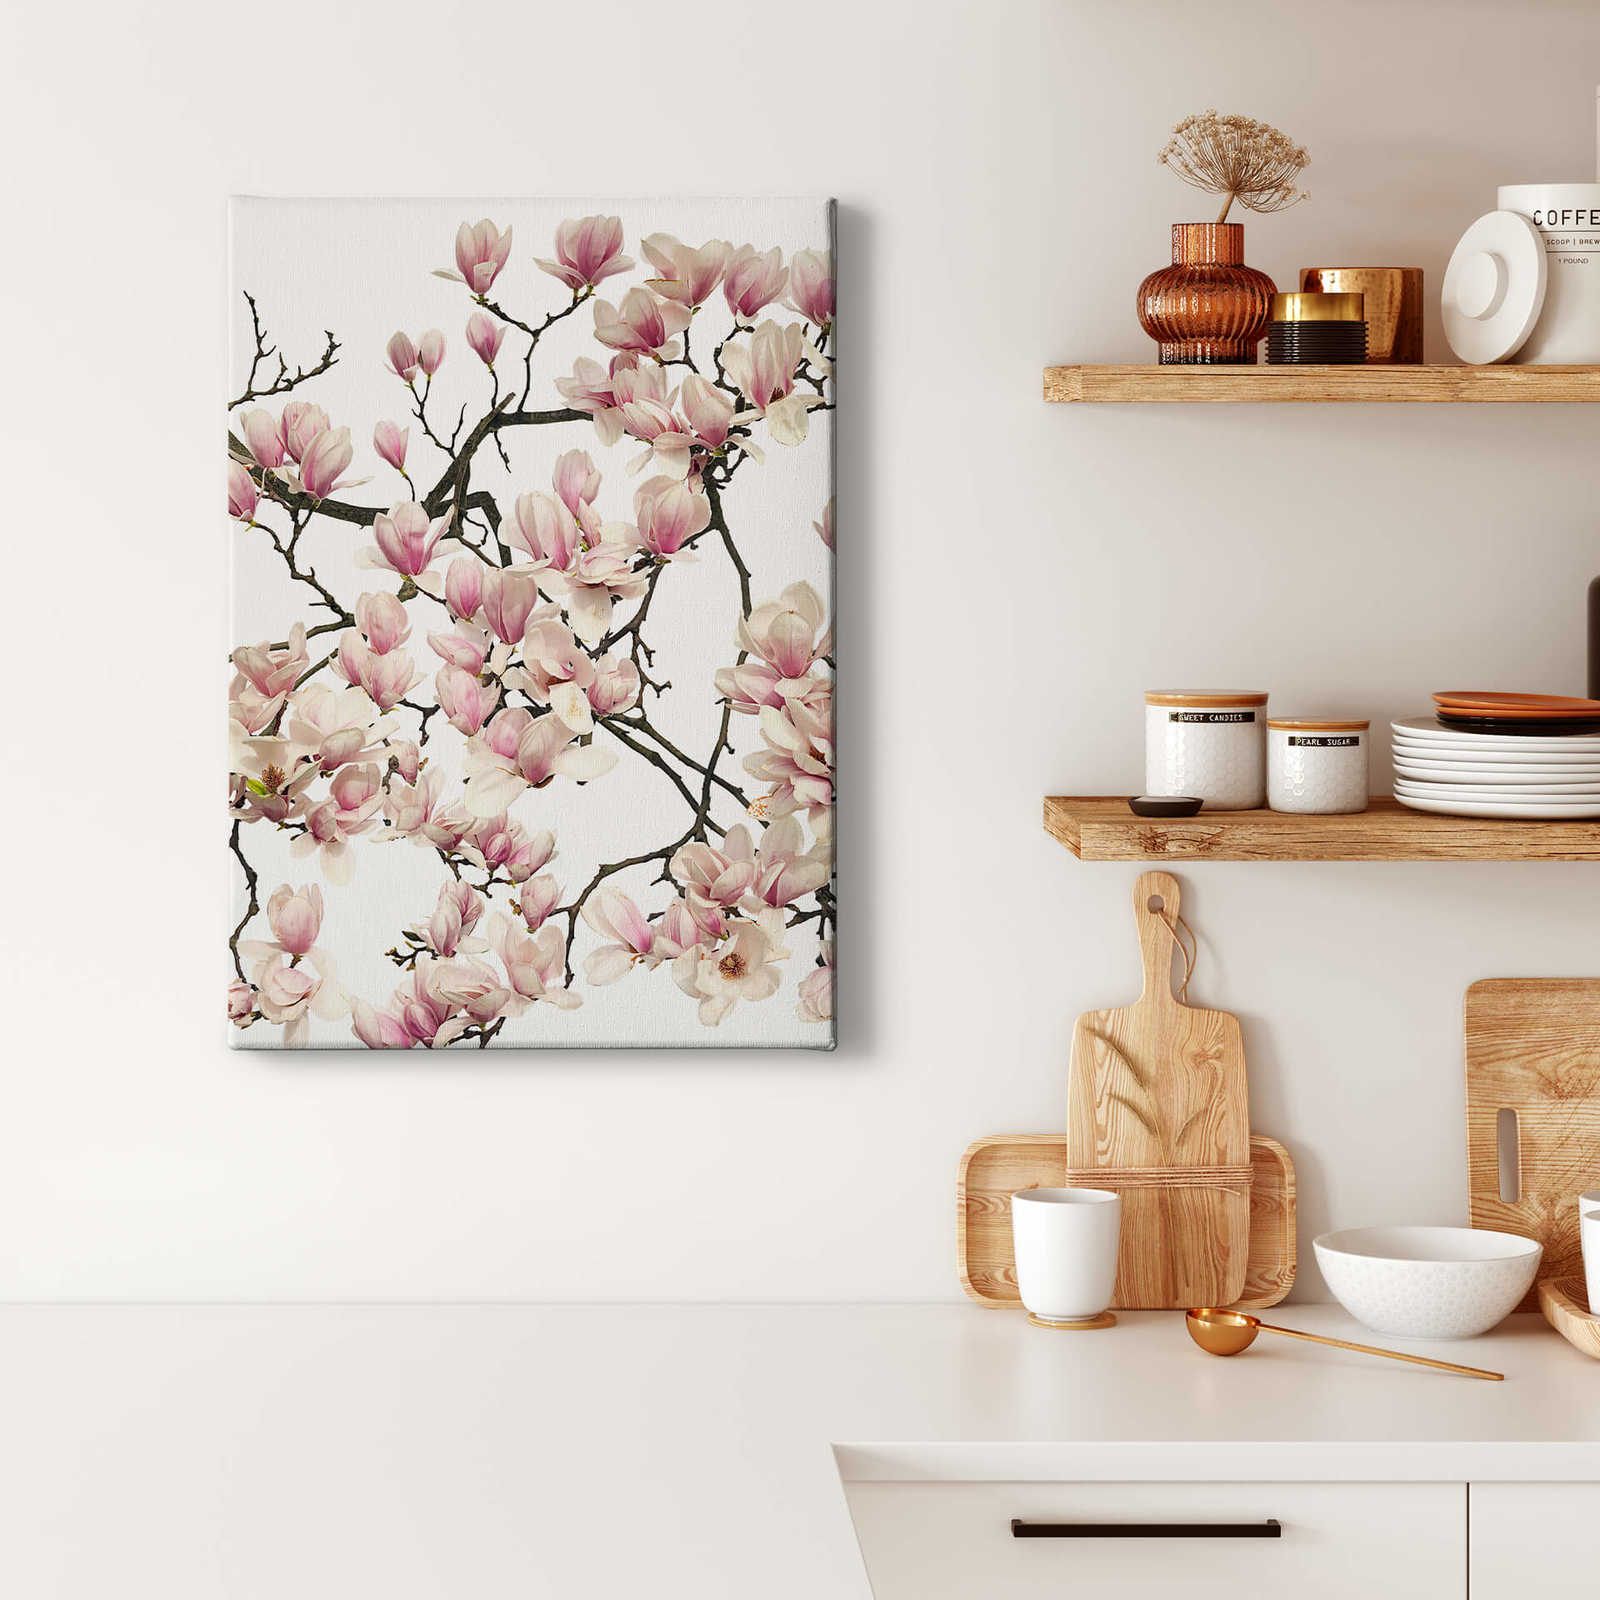             Kadam Canvas schilderij Kersenbloesem boom in de lente - 0.50 m x 0.70 m
        